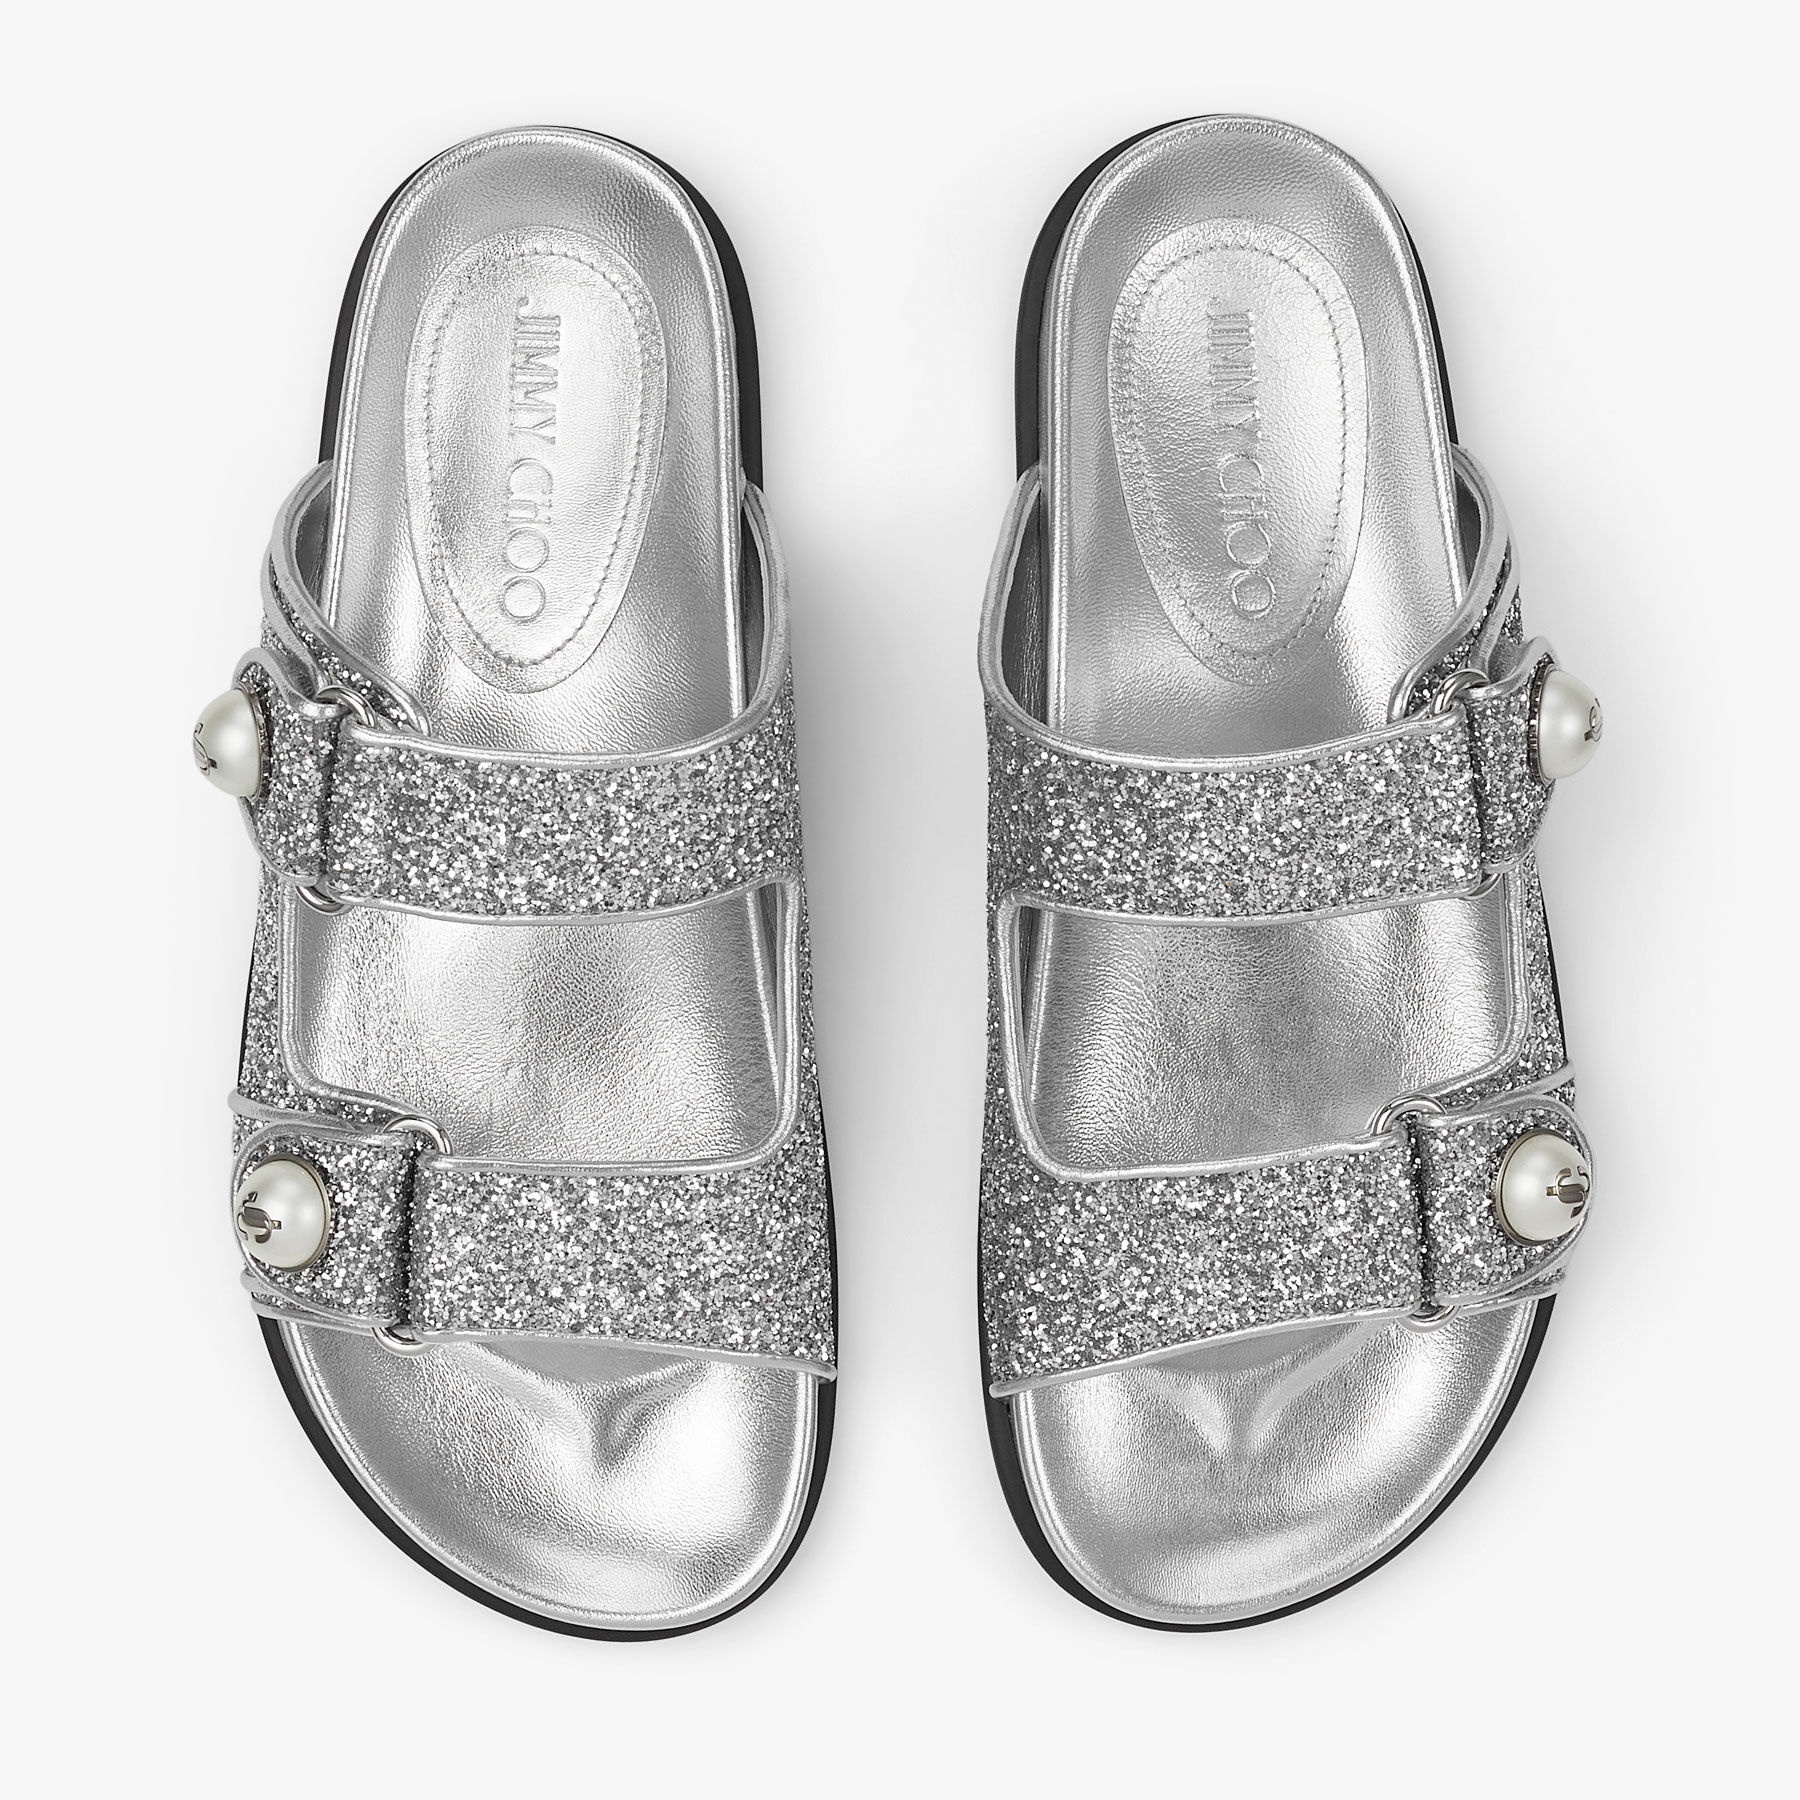 Fayence Sandal
Silver Metallic Nappa Sandals - 4